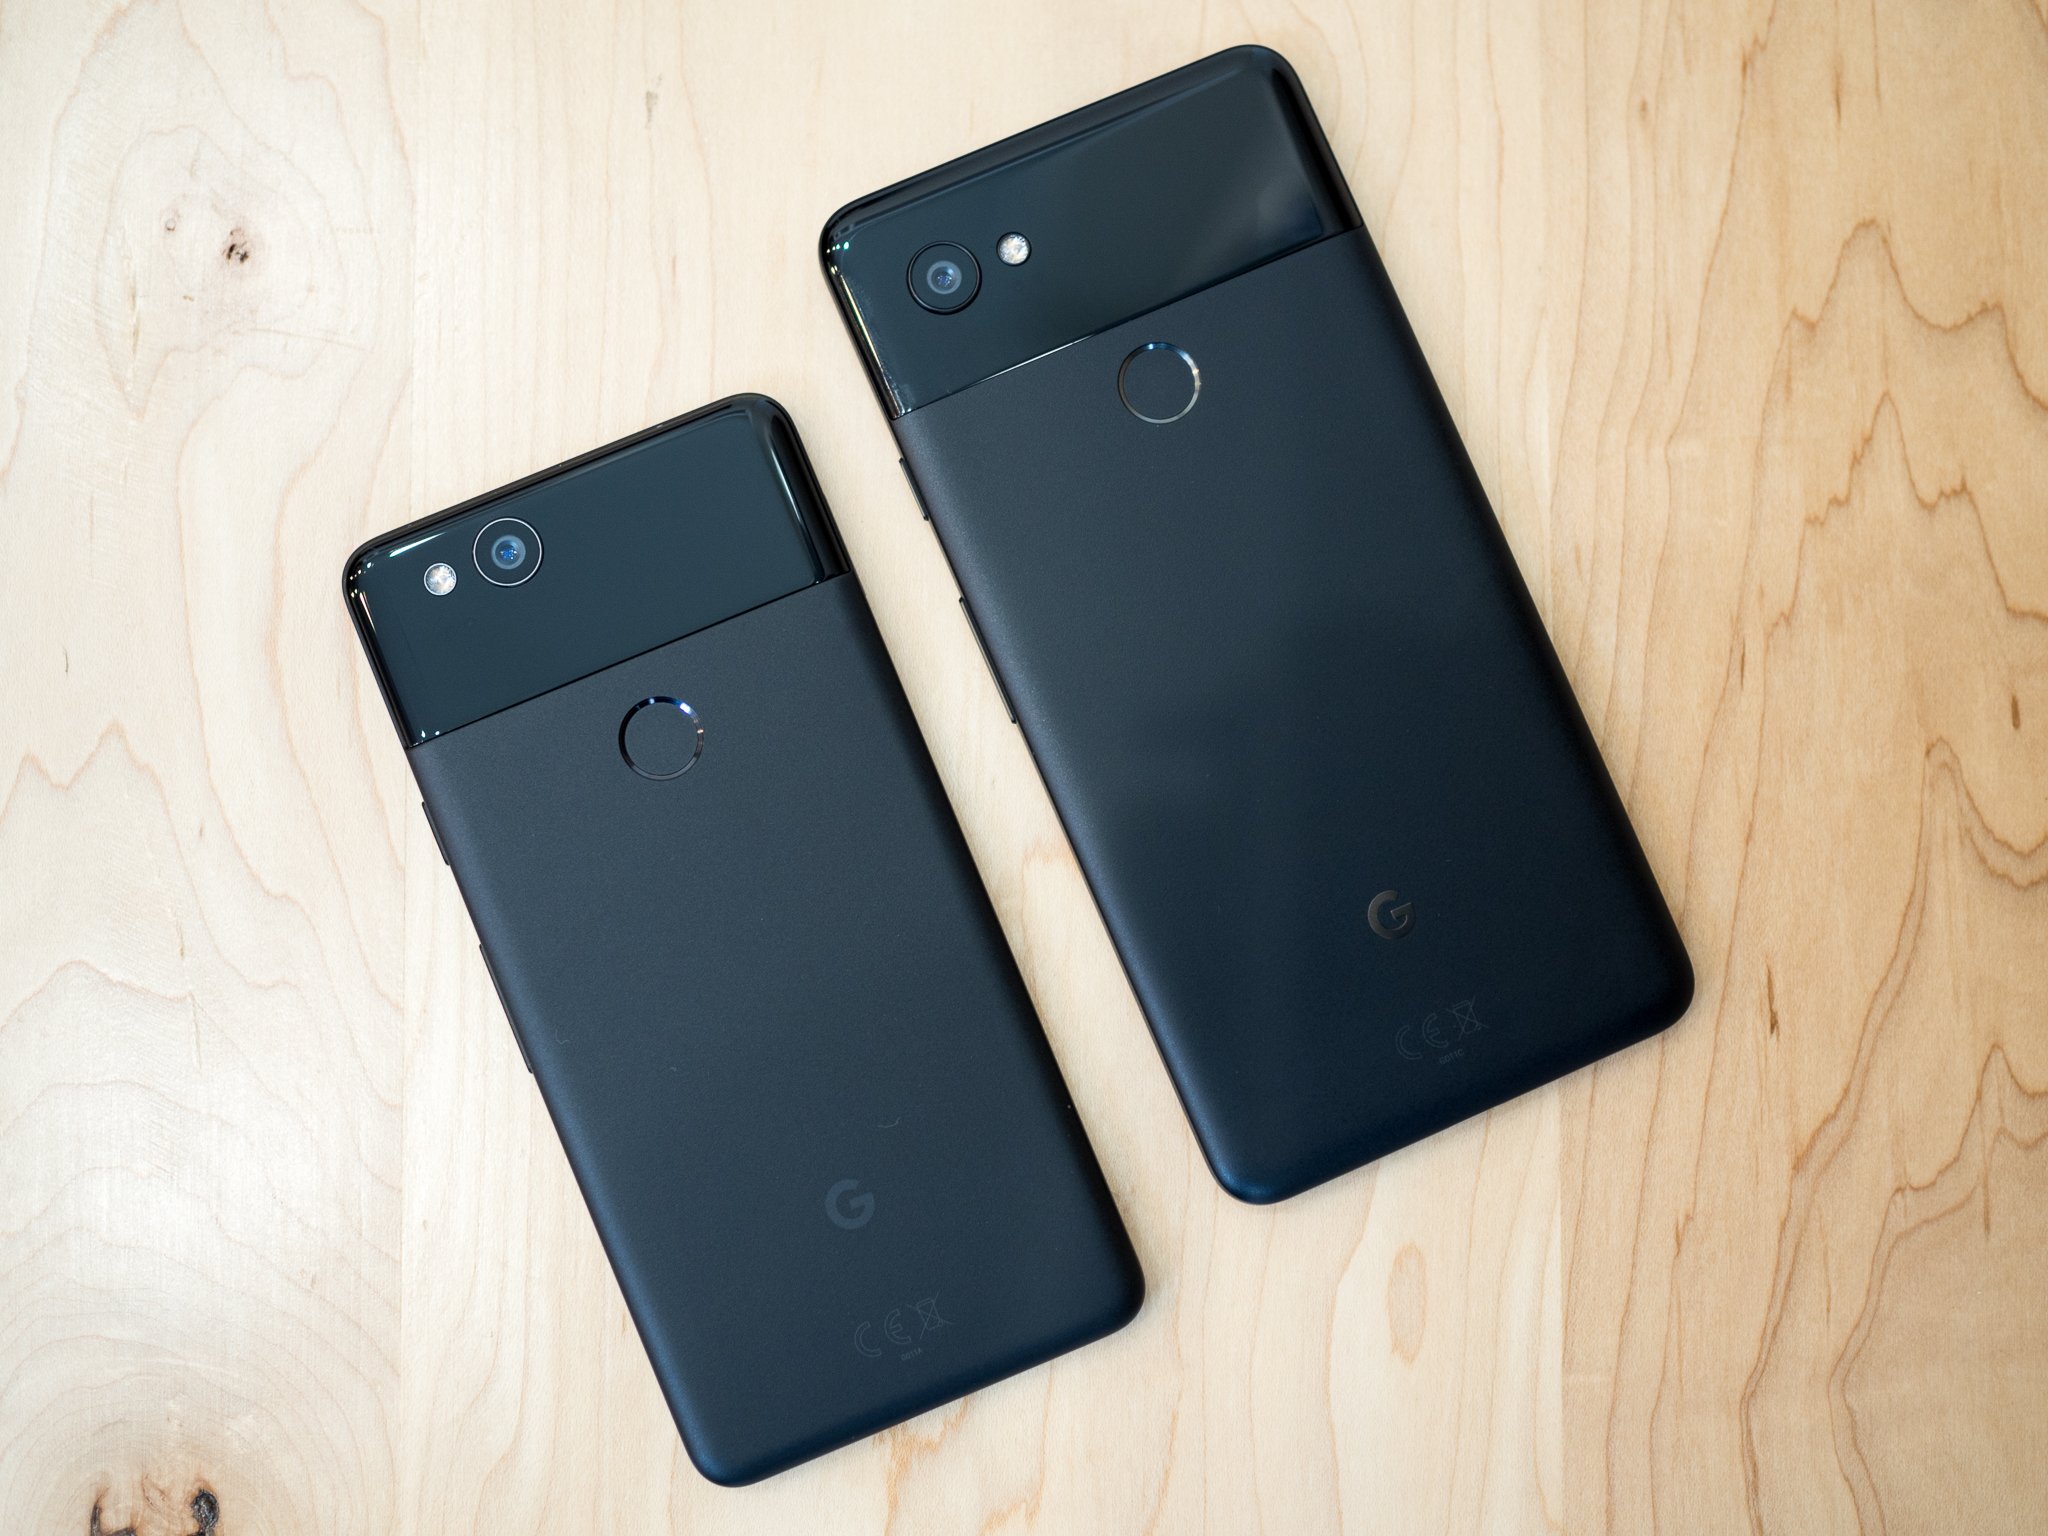 Google Pixel 2 and 2 XL